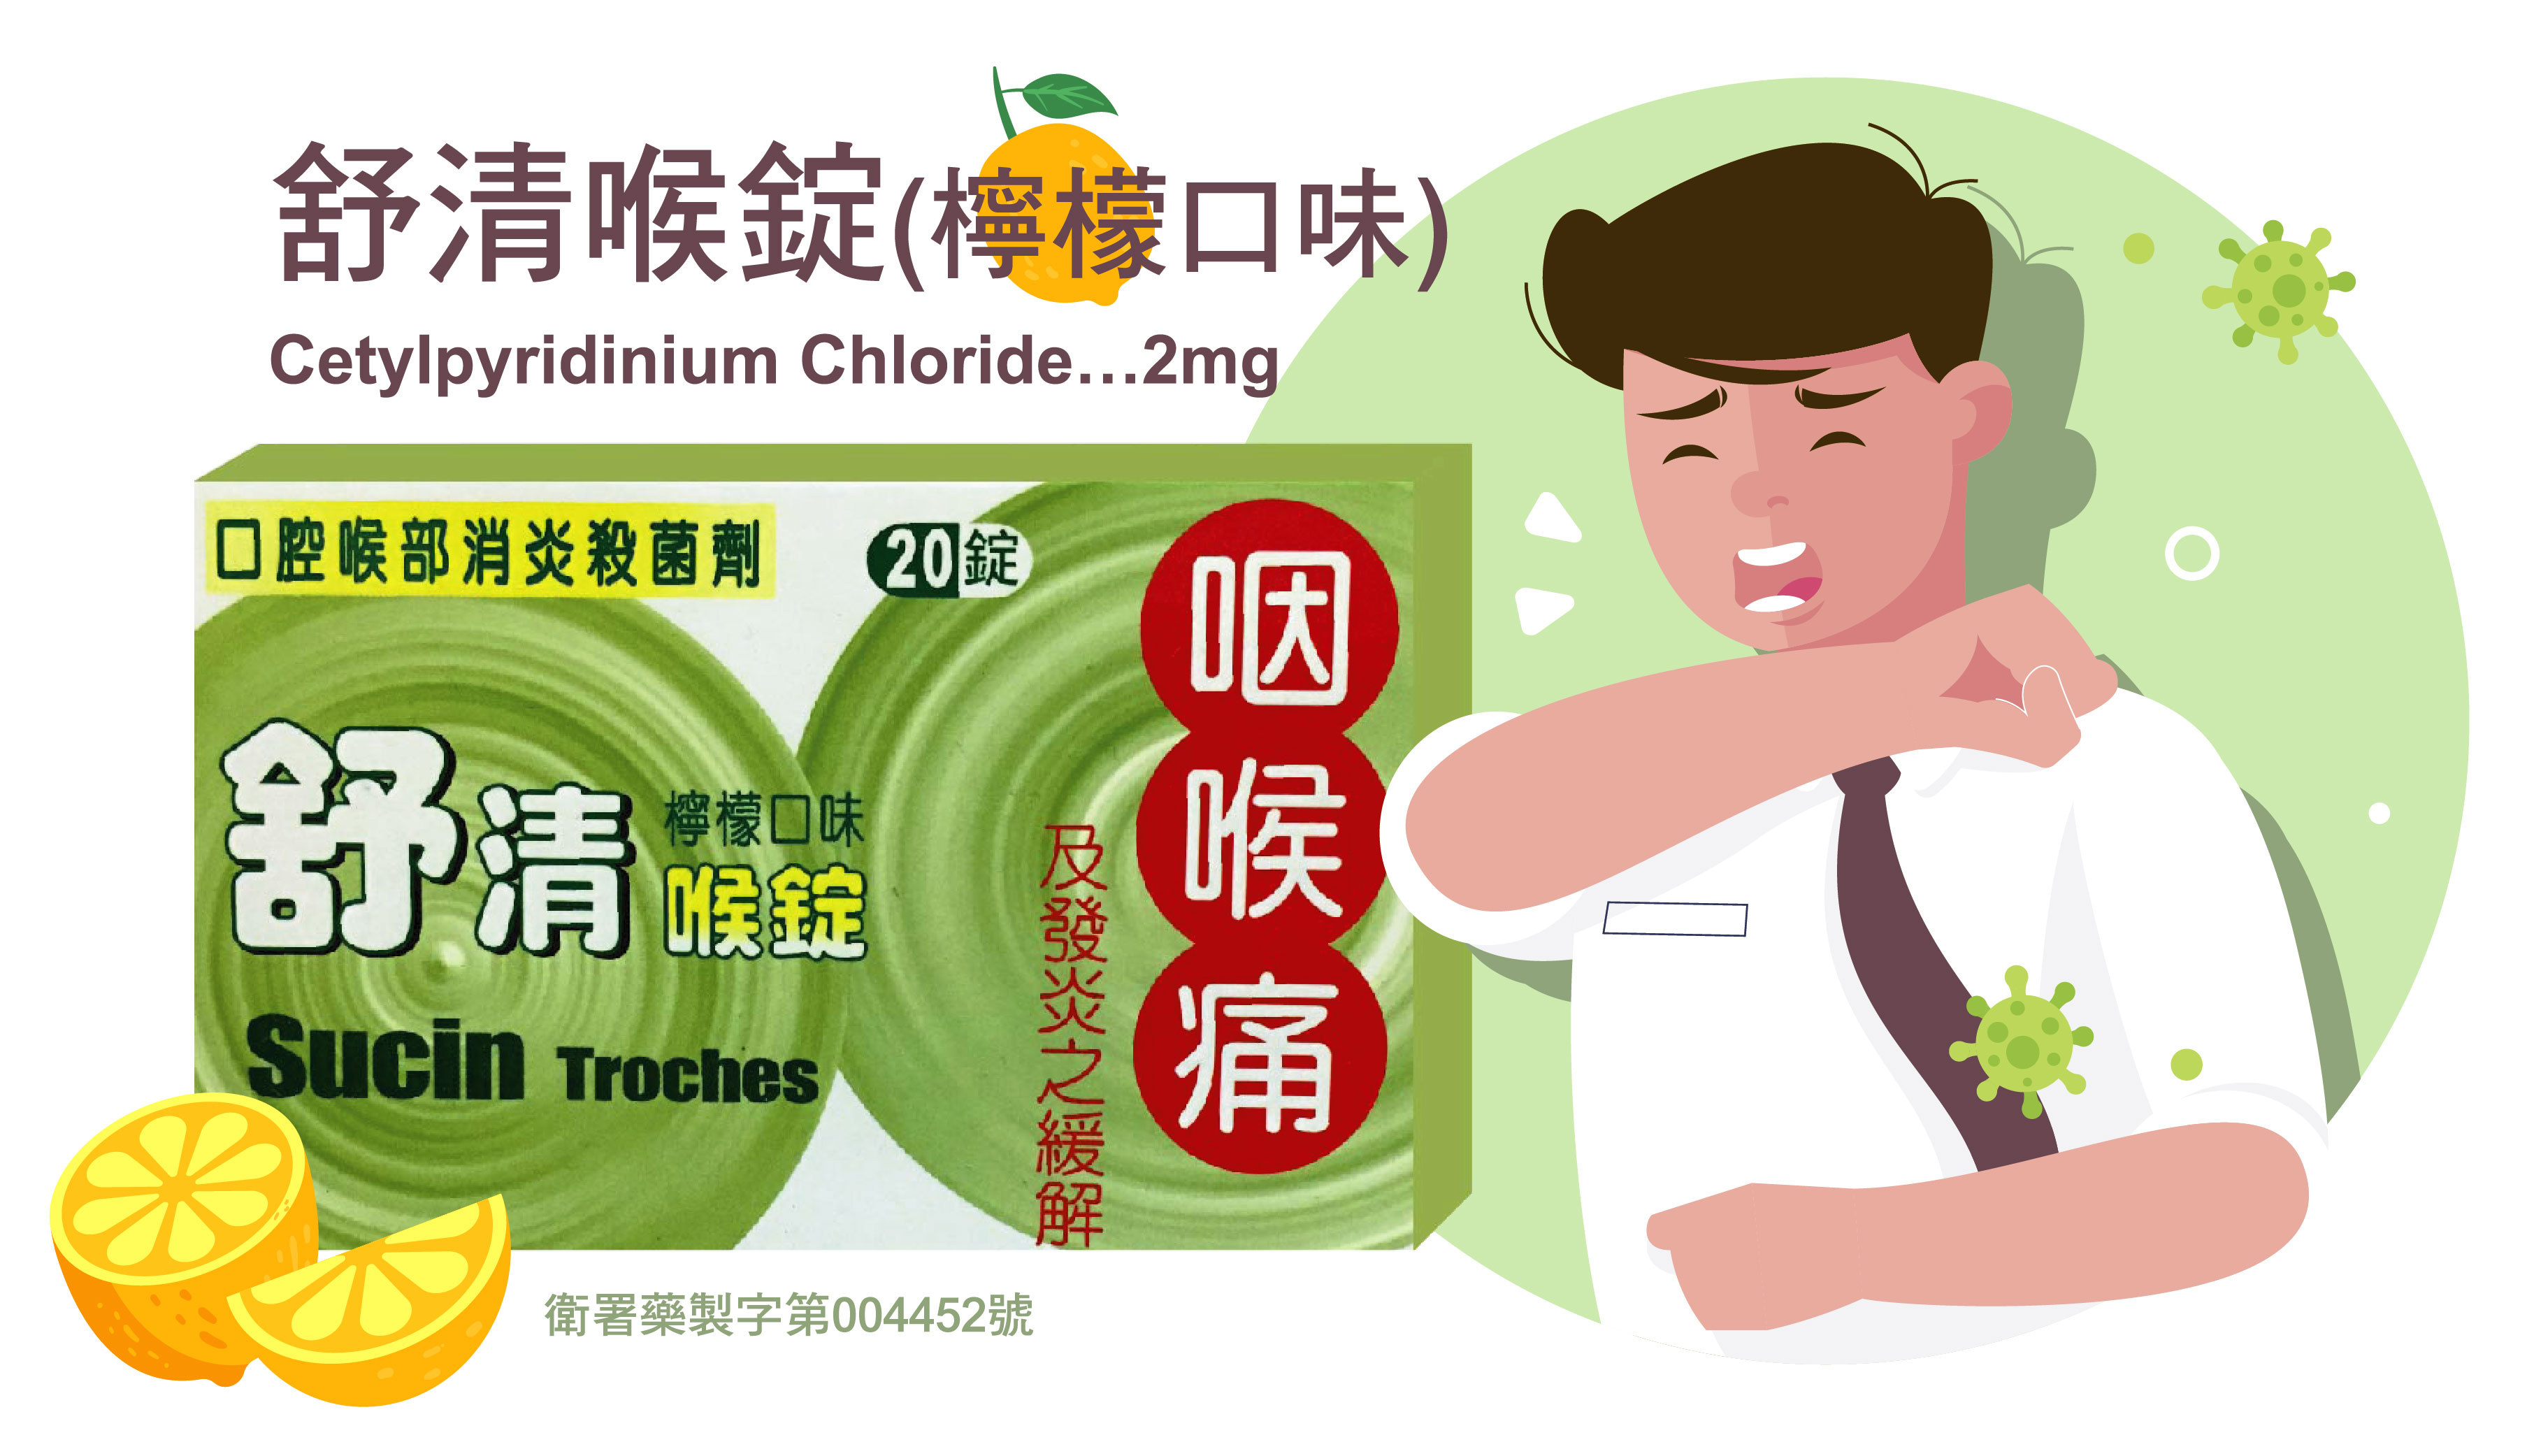 Sucin Troches Cetylpyridinium Chloride 2mg